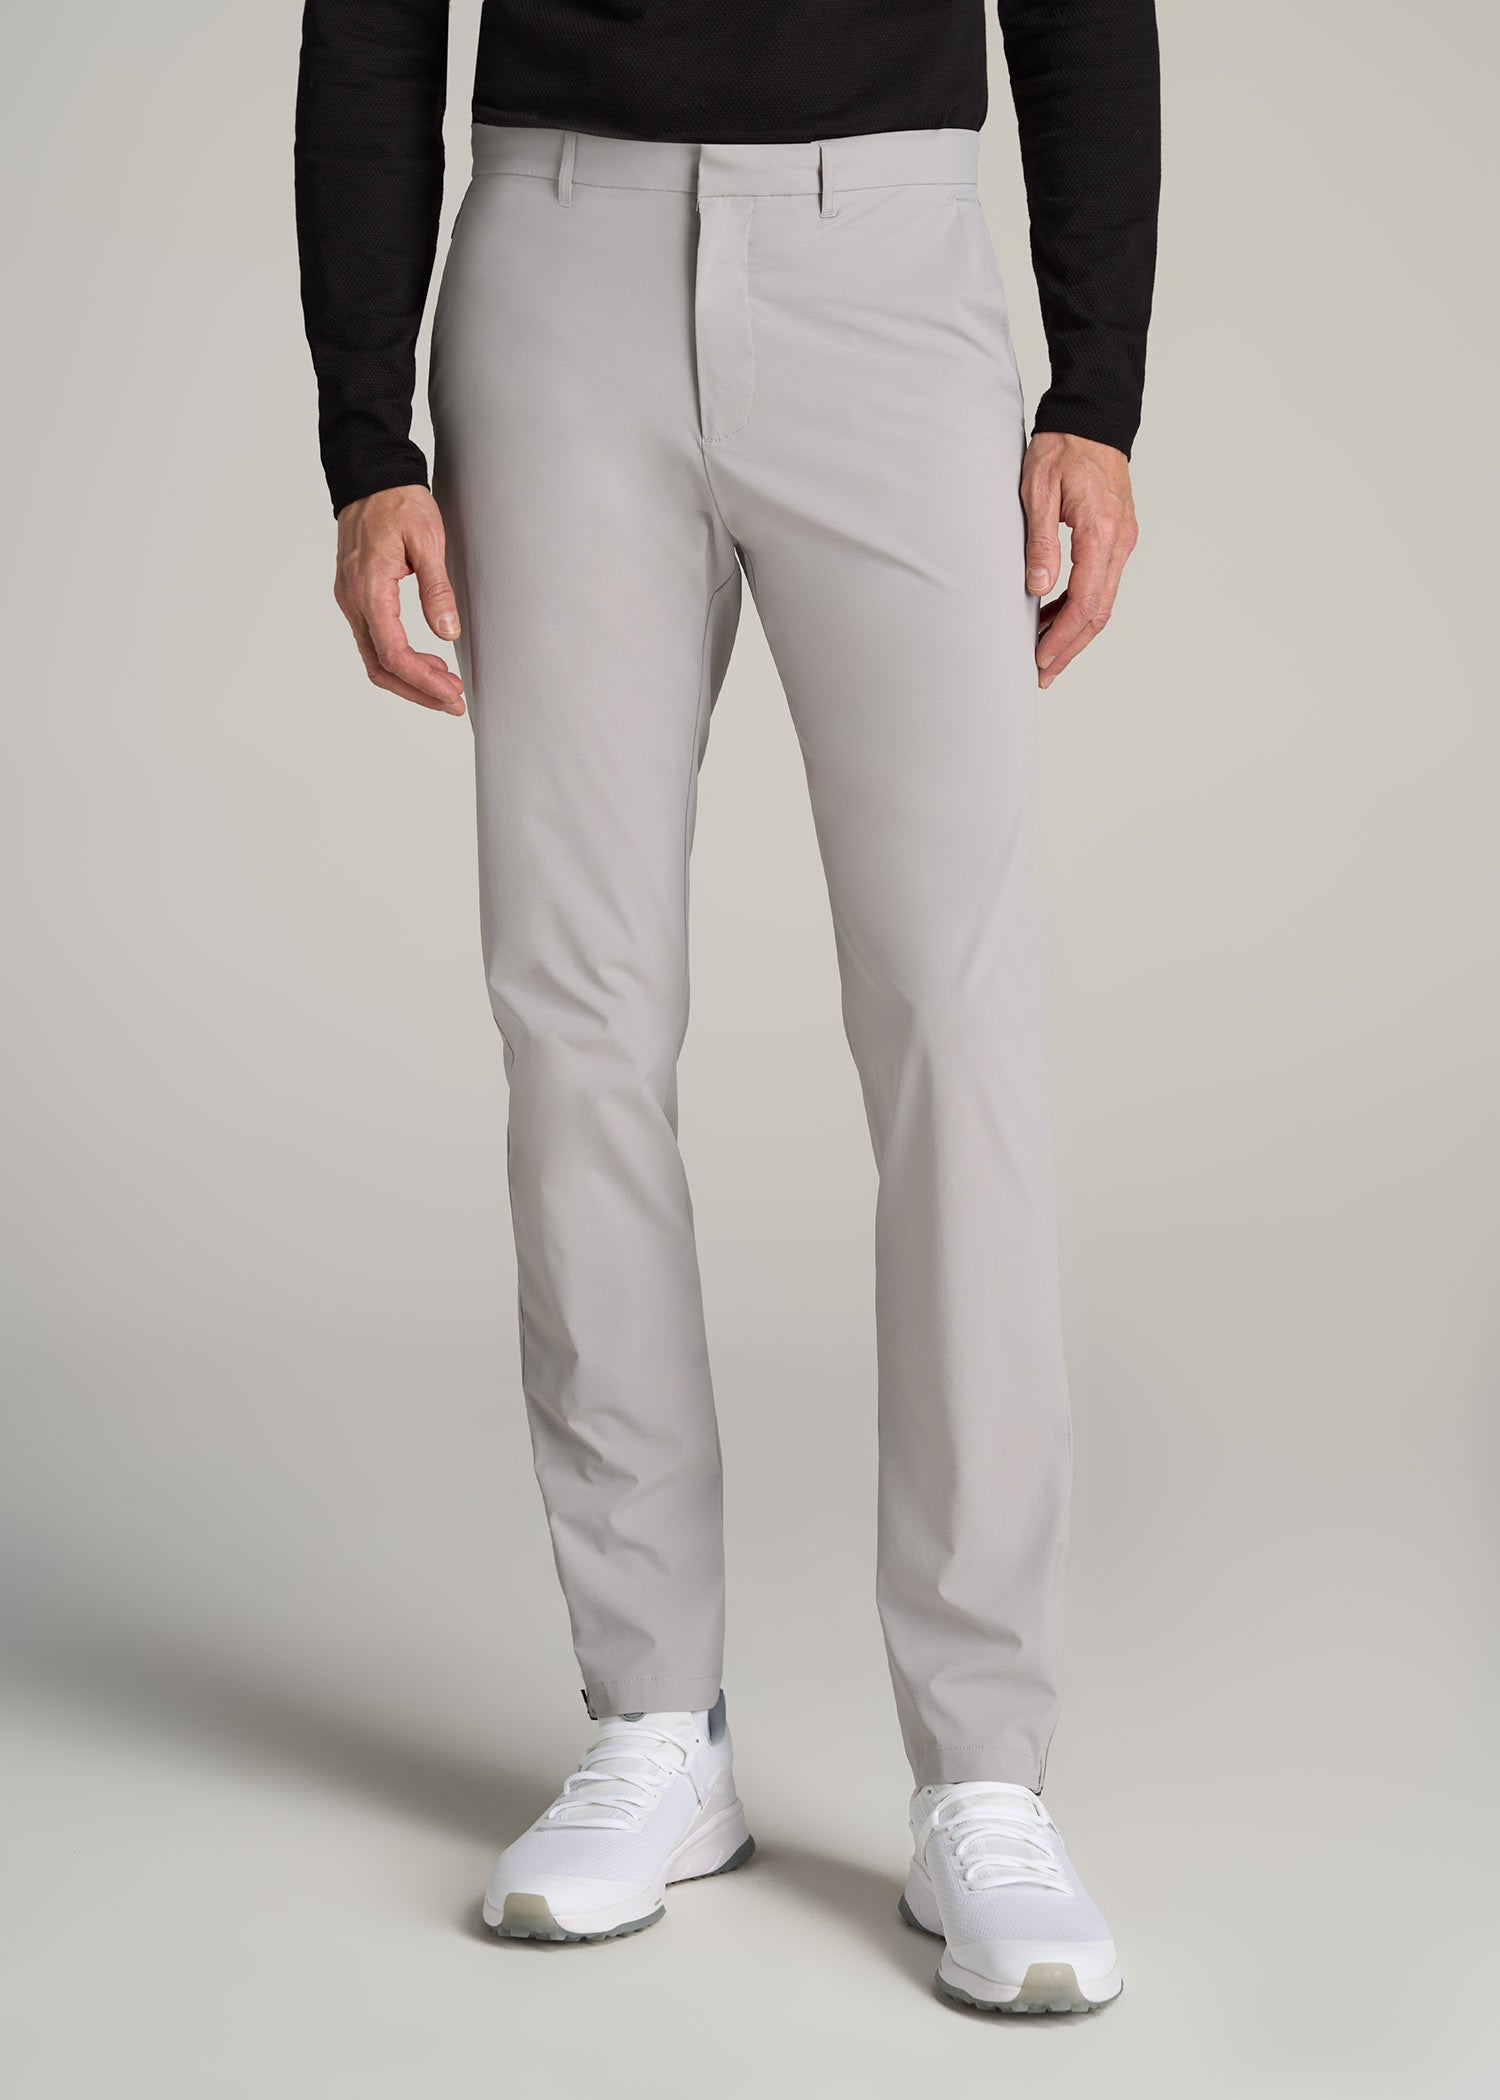 Men's Stretch Golf Pants Slim Fit Quick Dry Pants - Light Grey / S